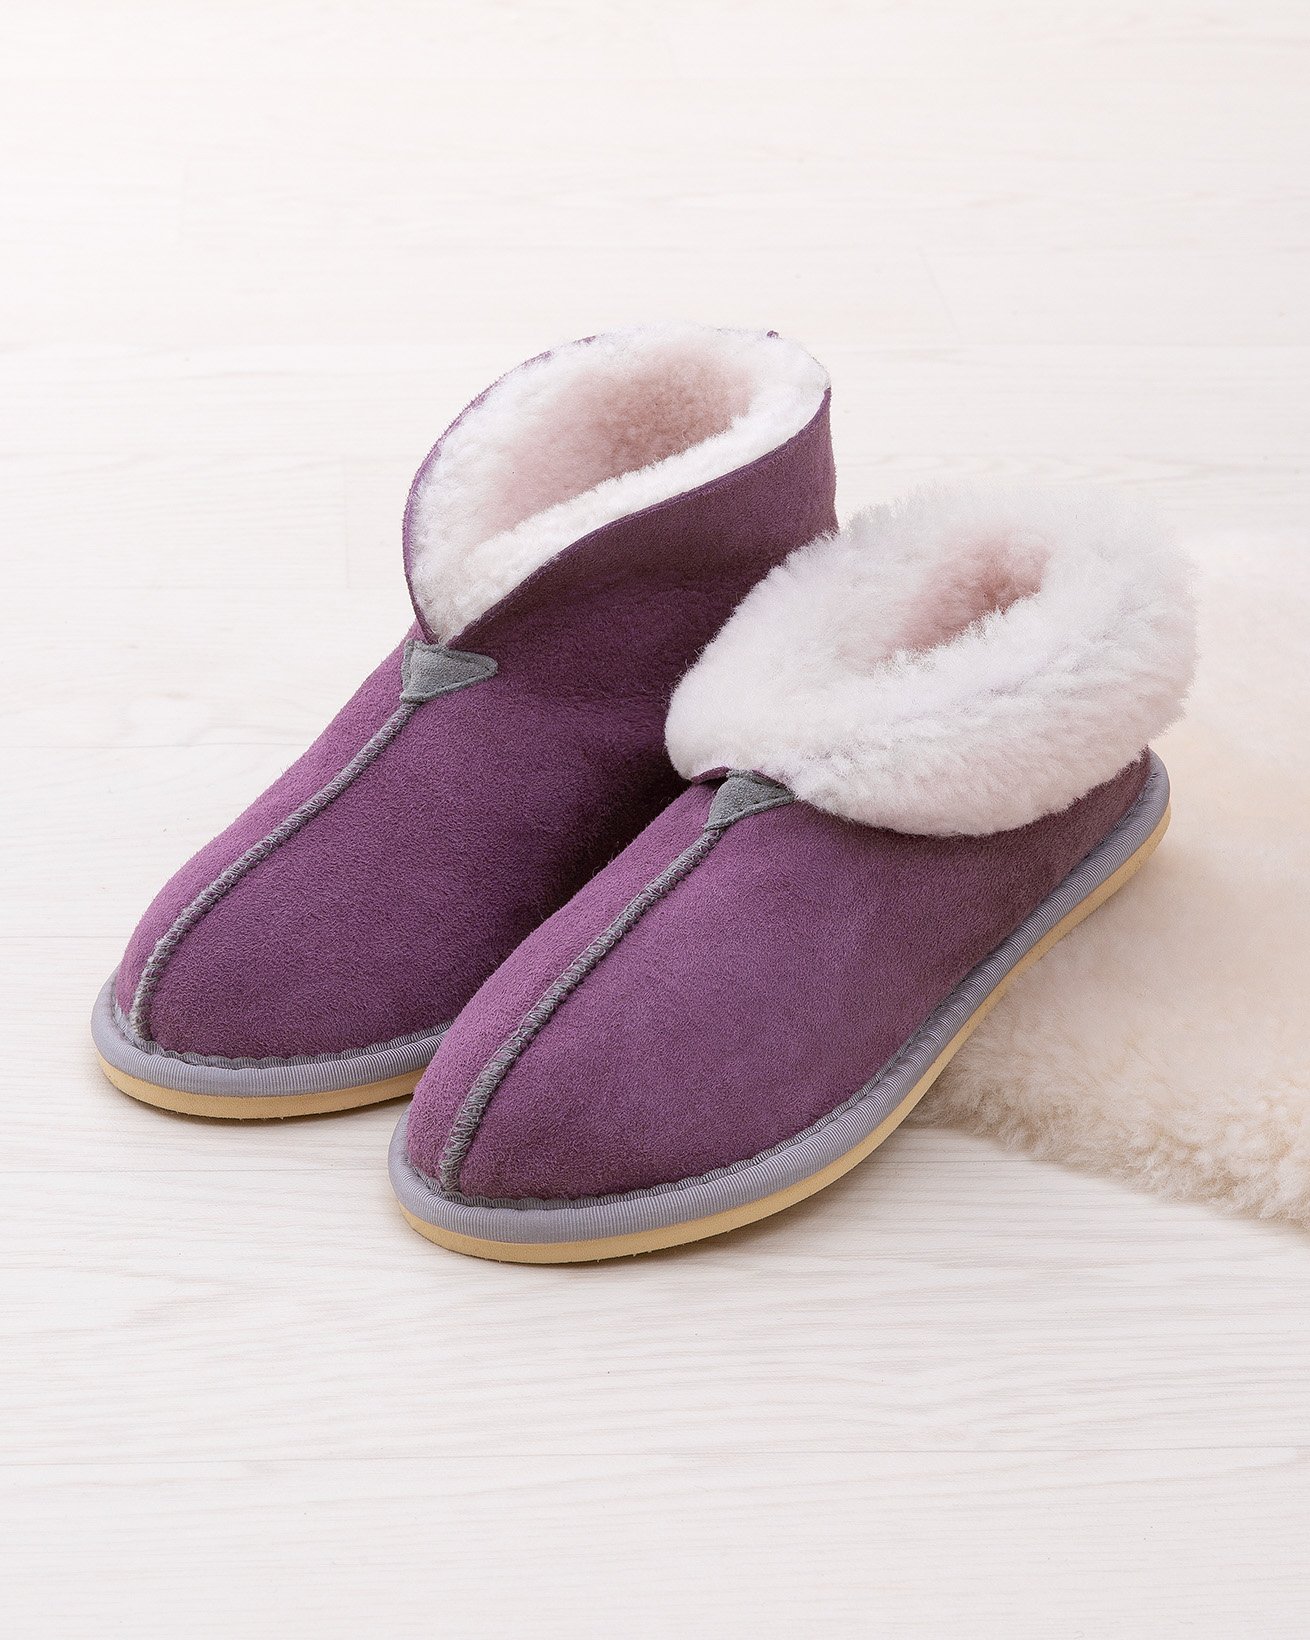 2100-ladies sheepskin bootee slippers-anemone-1.jpg